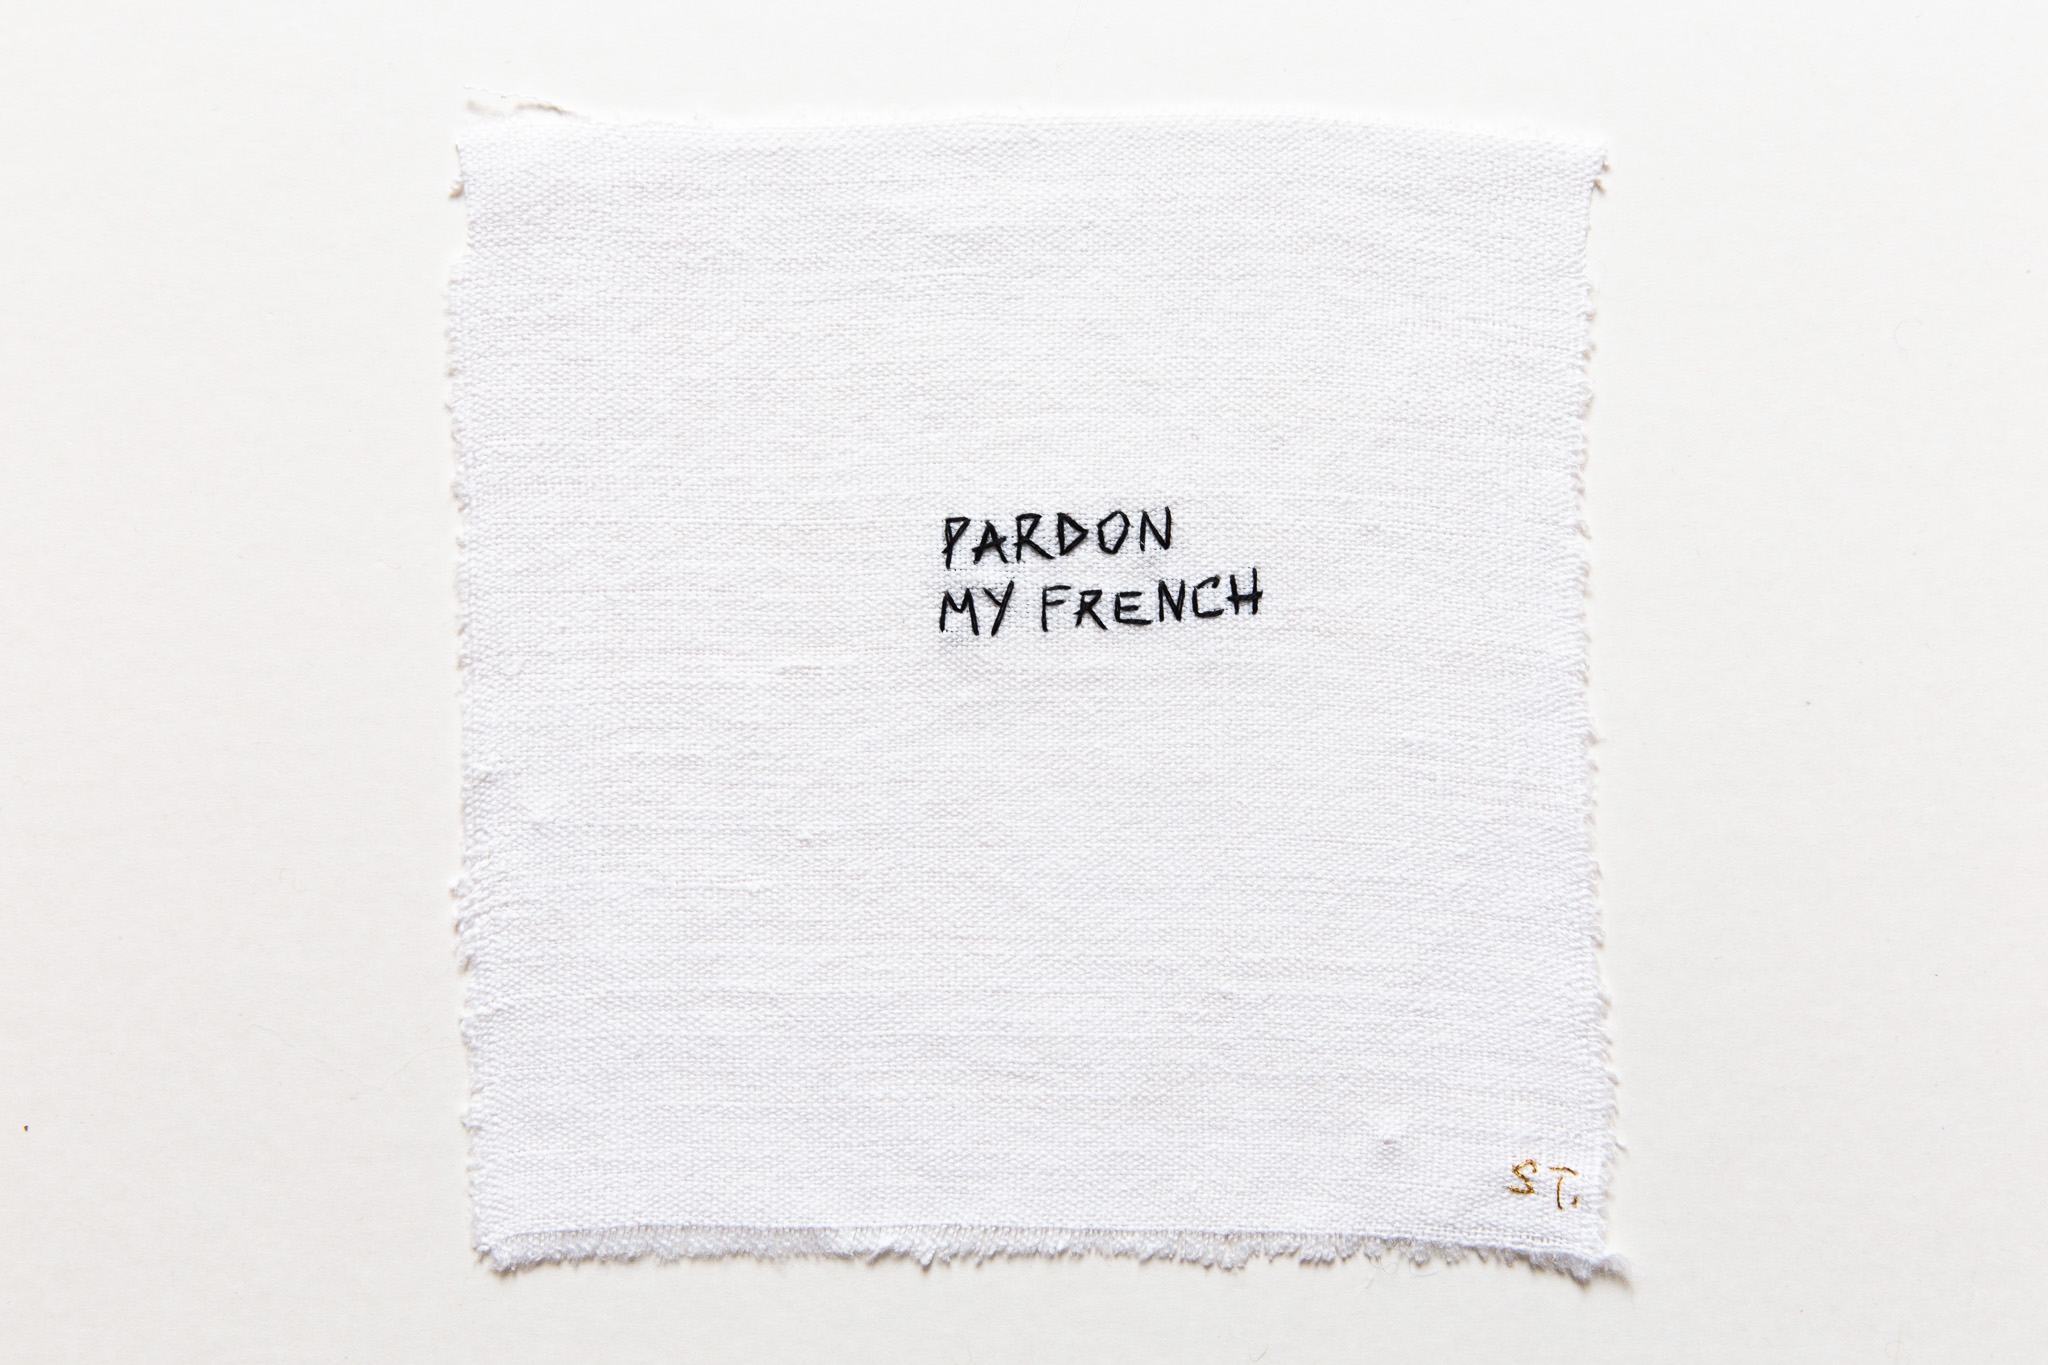 Pardon my french